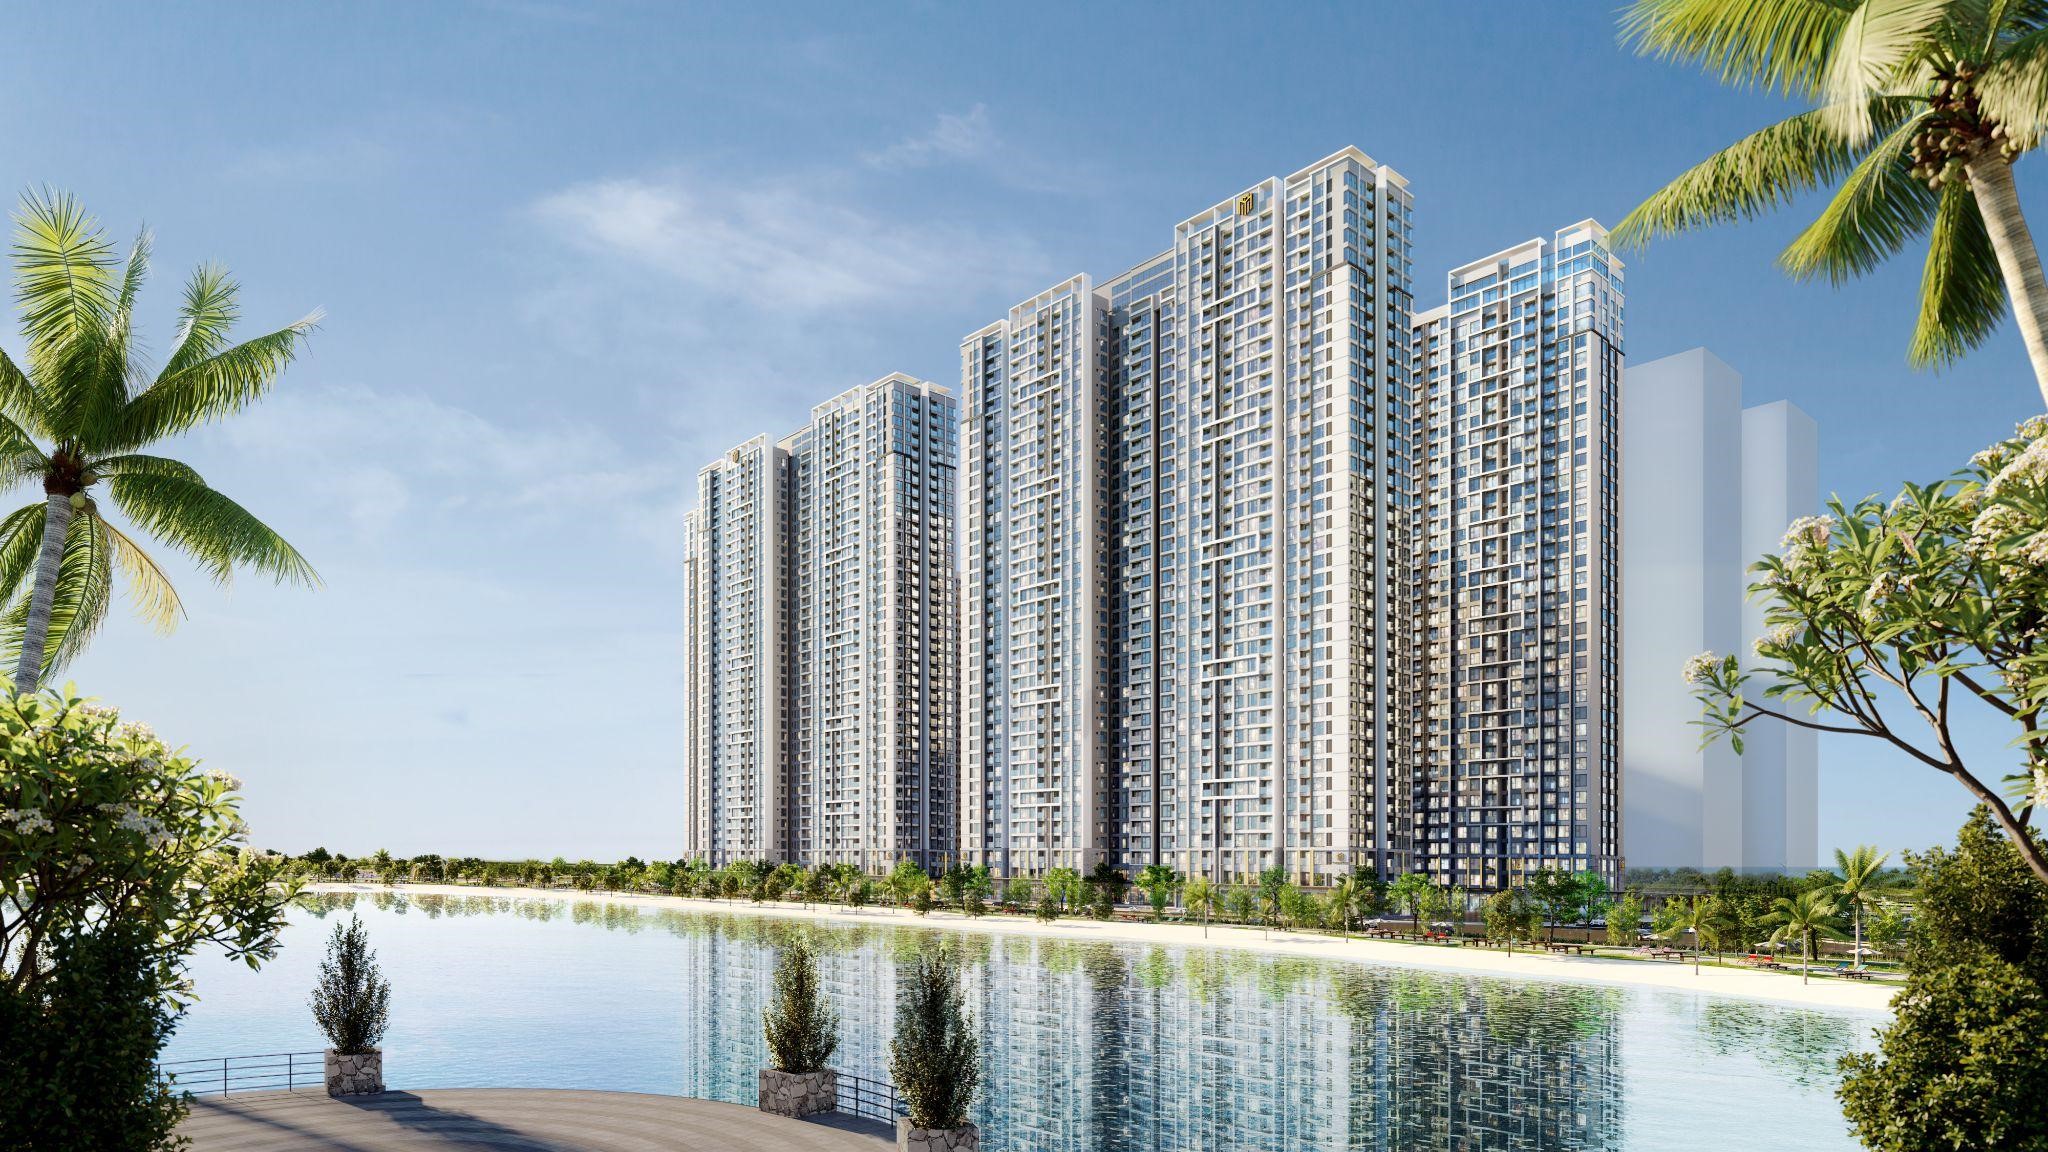 huong-dan-di-chuyen-tu-masteri-west-heights-den-ben-xe-my-dinh-onehousing-1